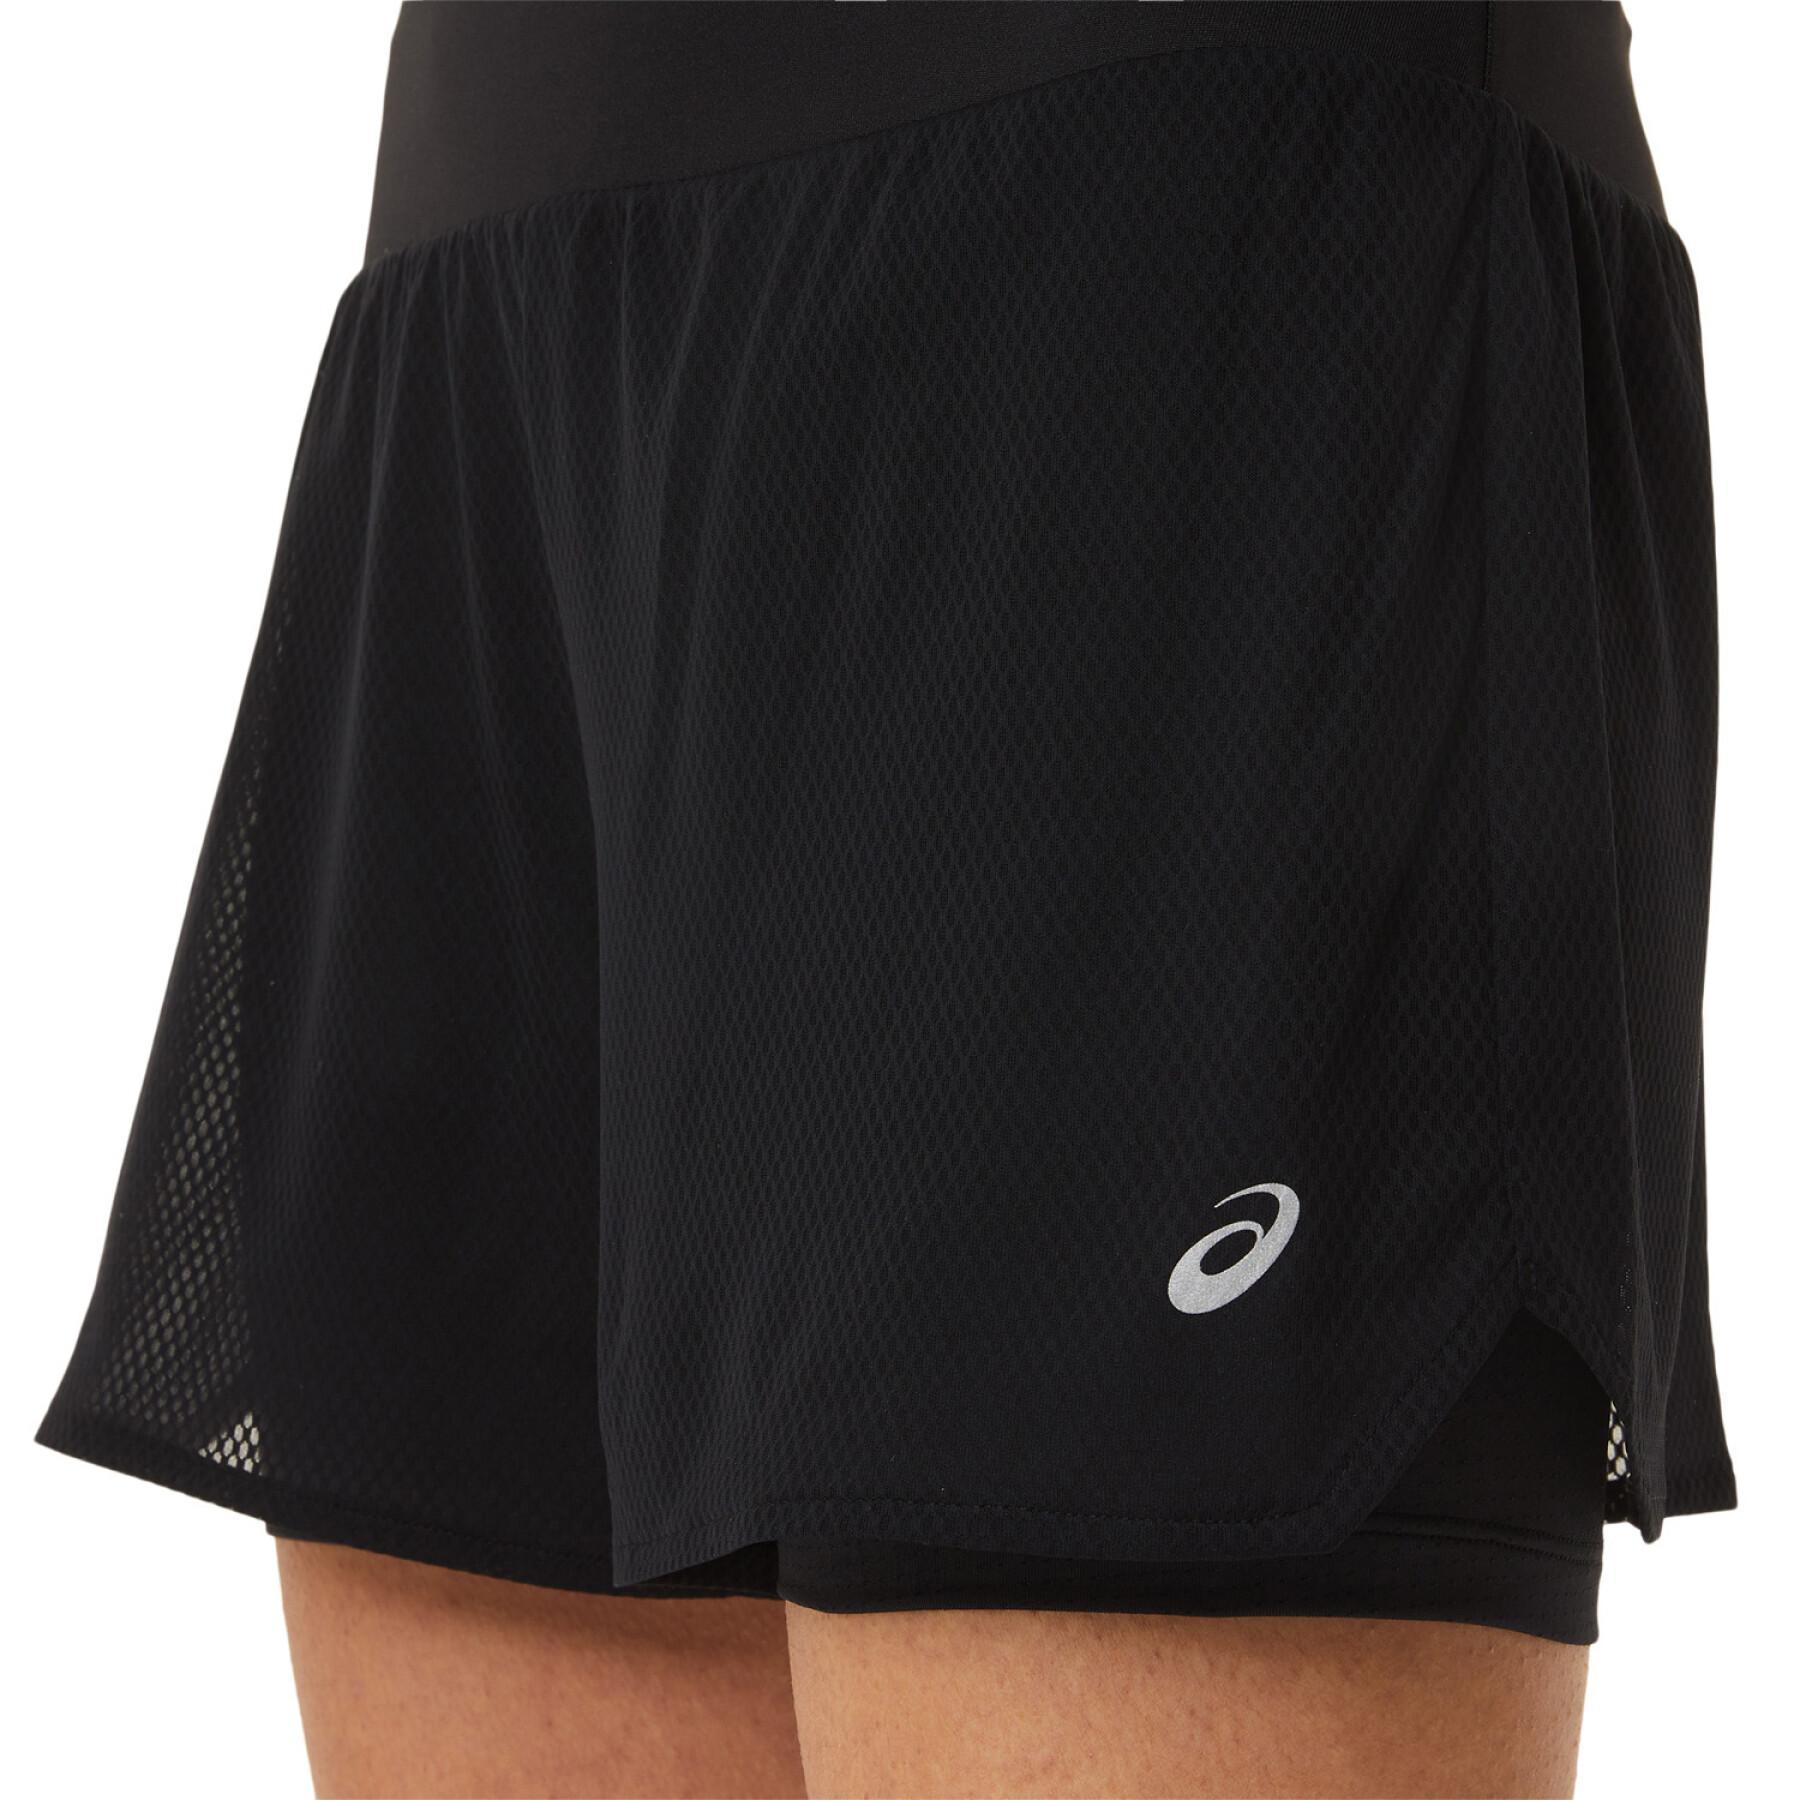 Women's shorts Asics Ventilate 2-N-1 3.5In